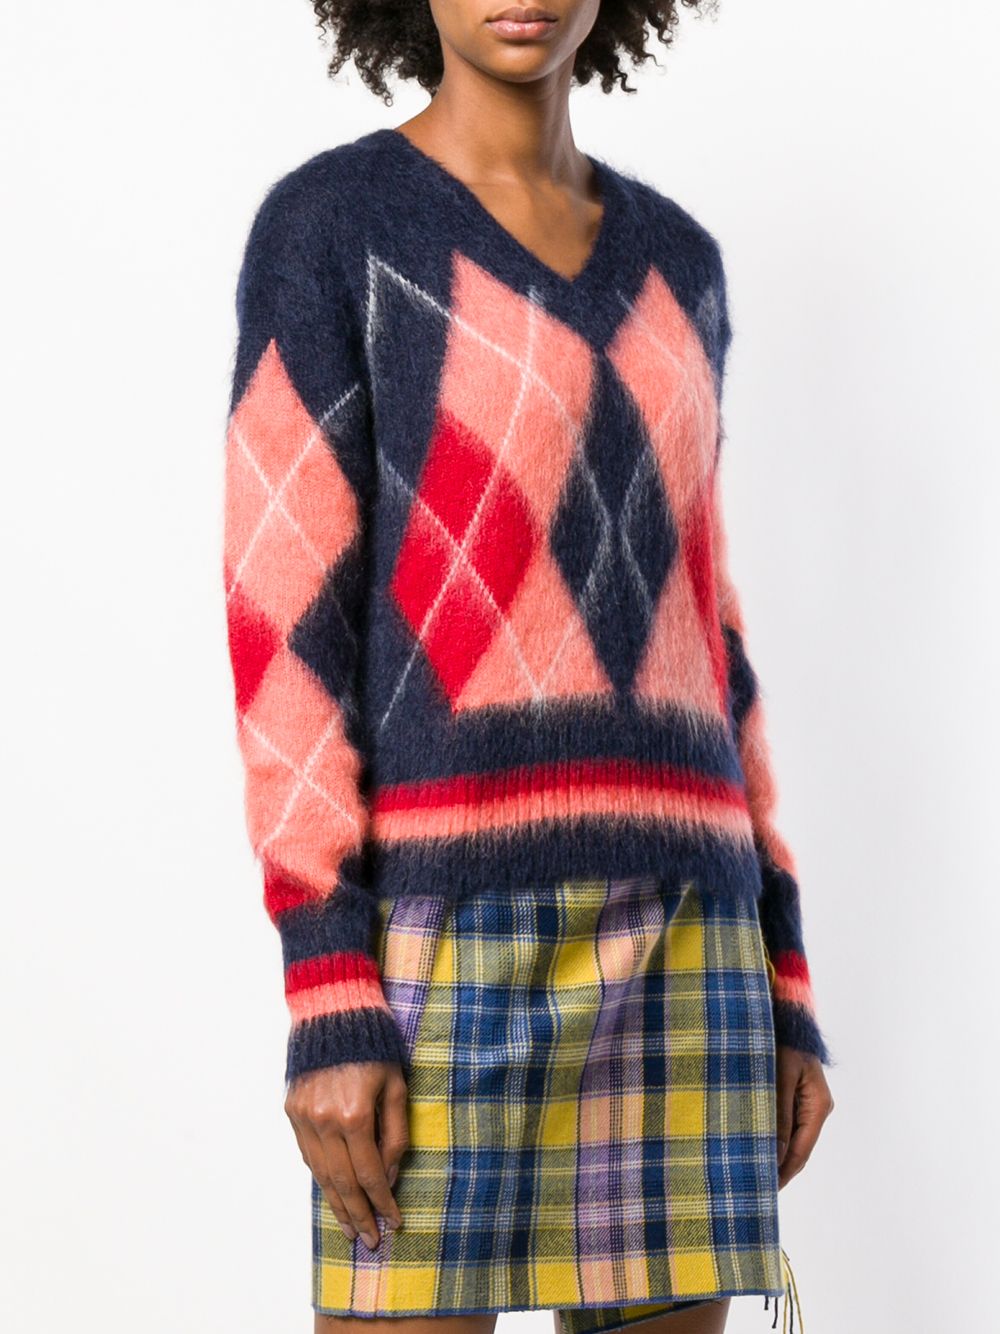 фото Ballantyne вязаный свитер с ромбами